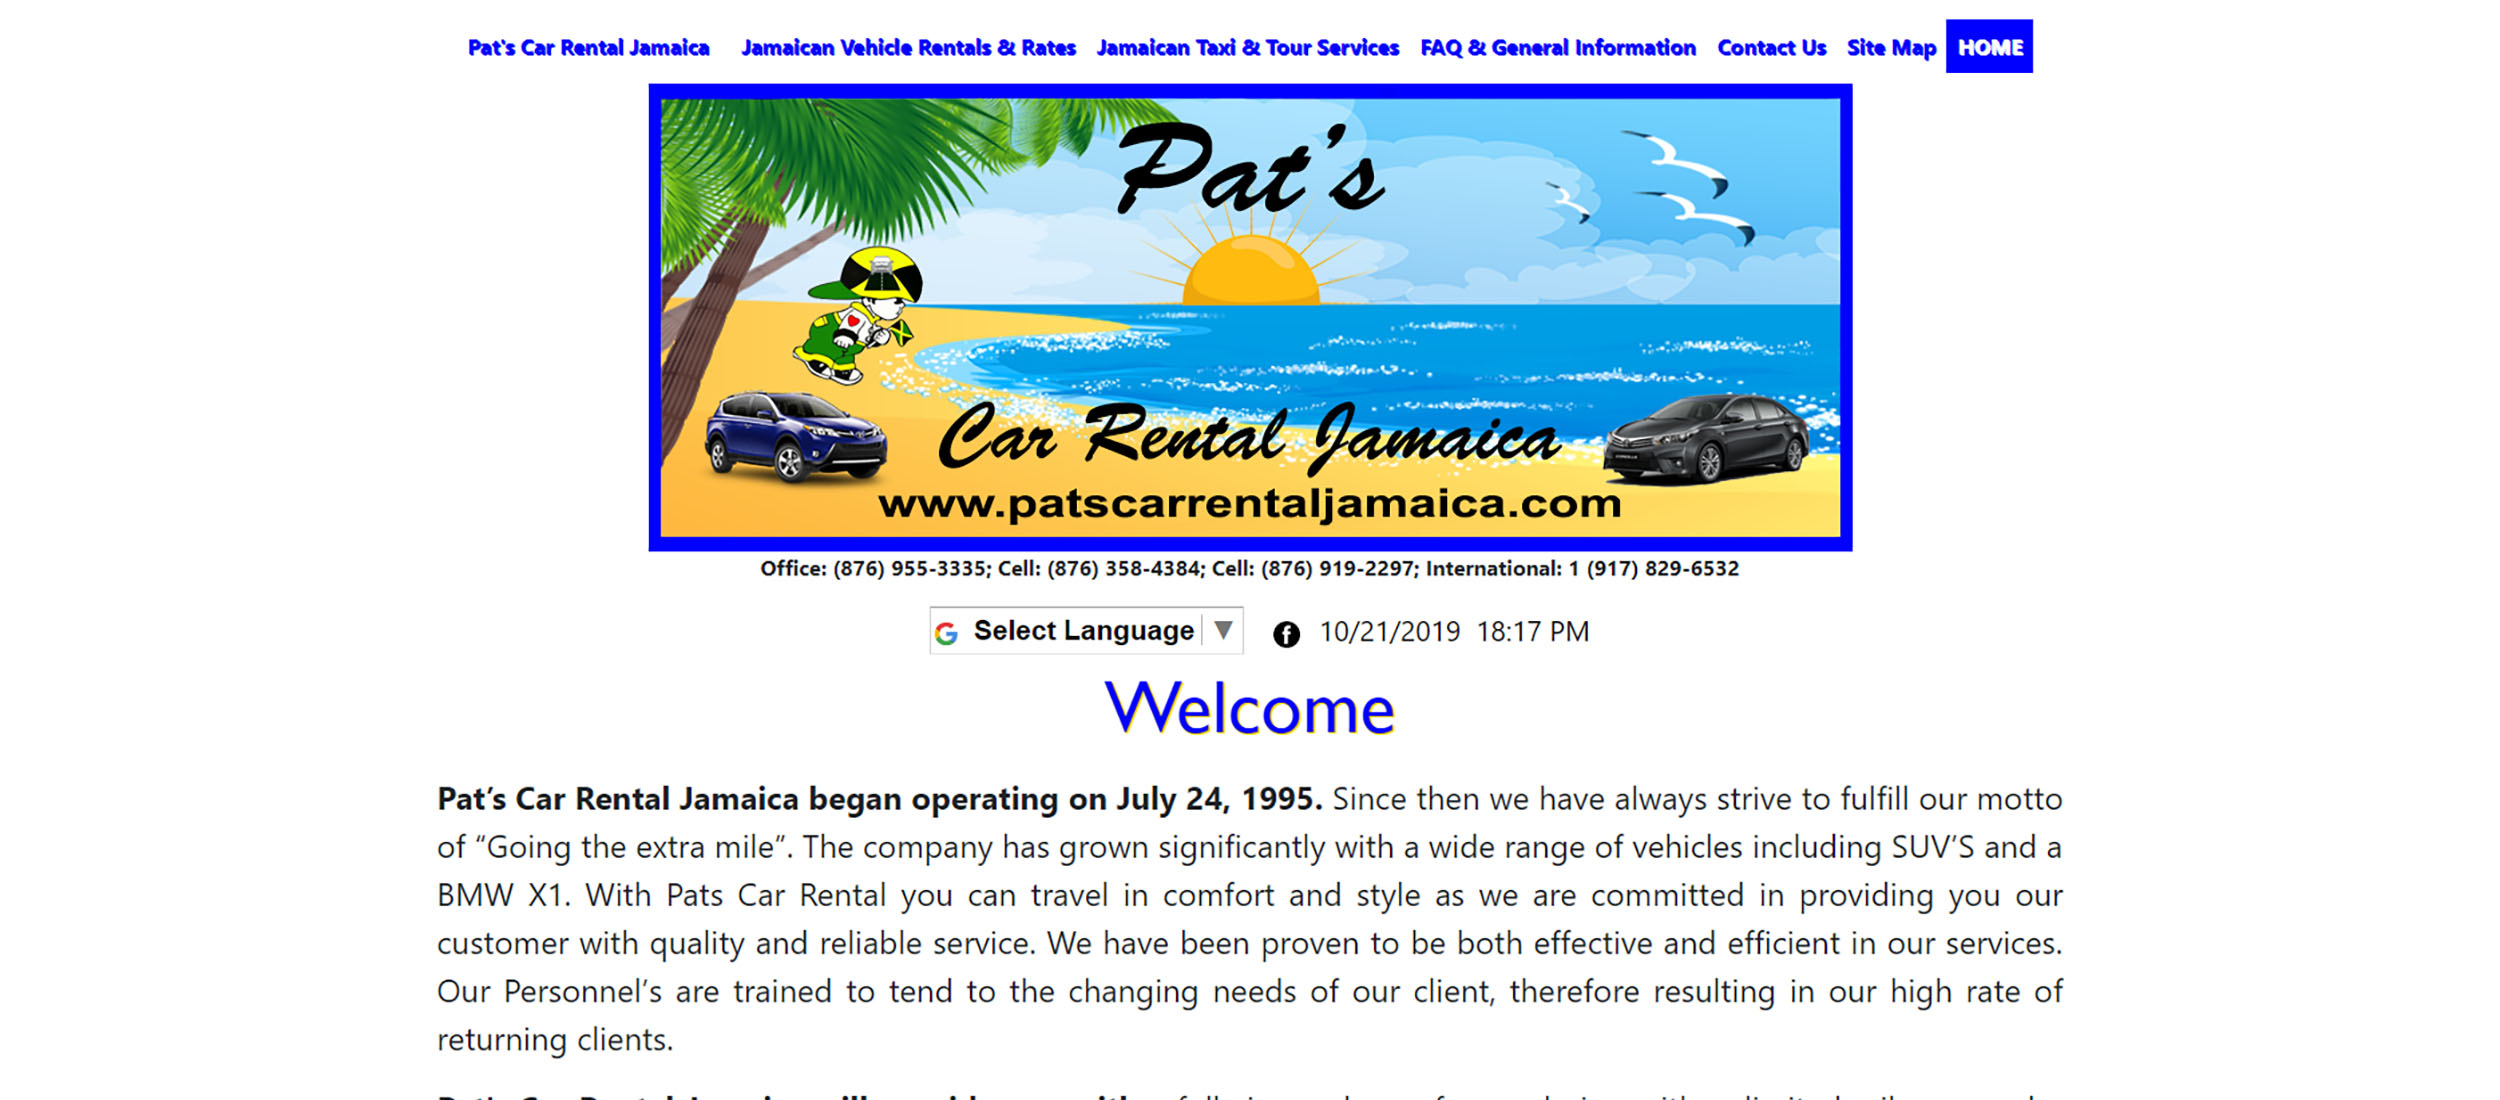 Pat's Car Rental Jamaica by Barry J. Hough Sr.